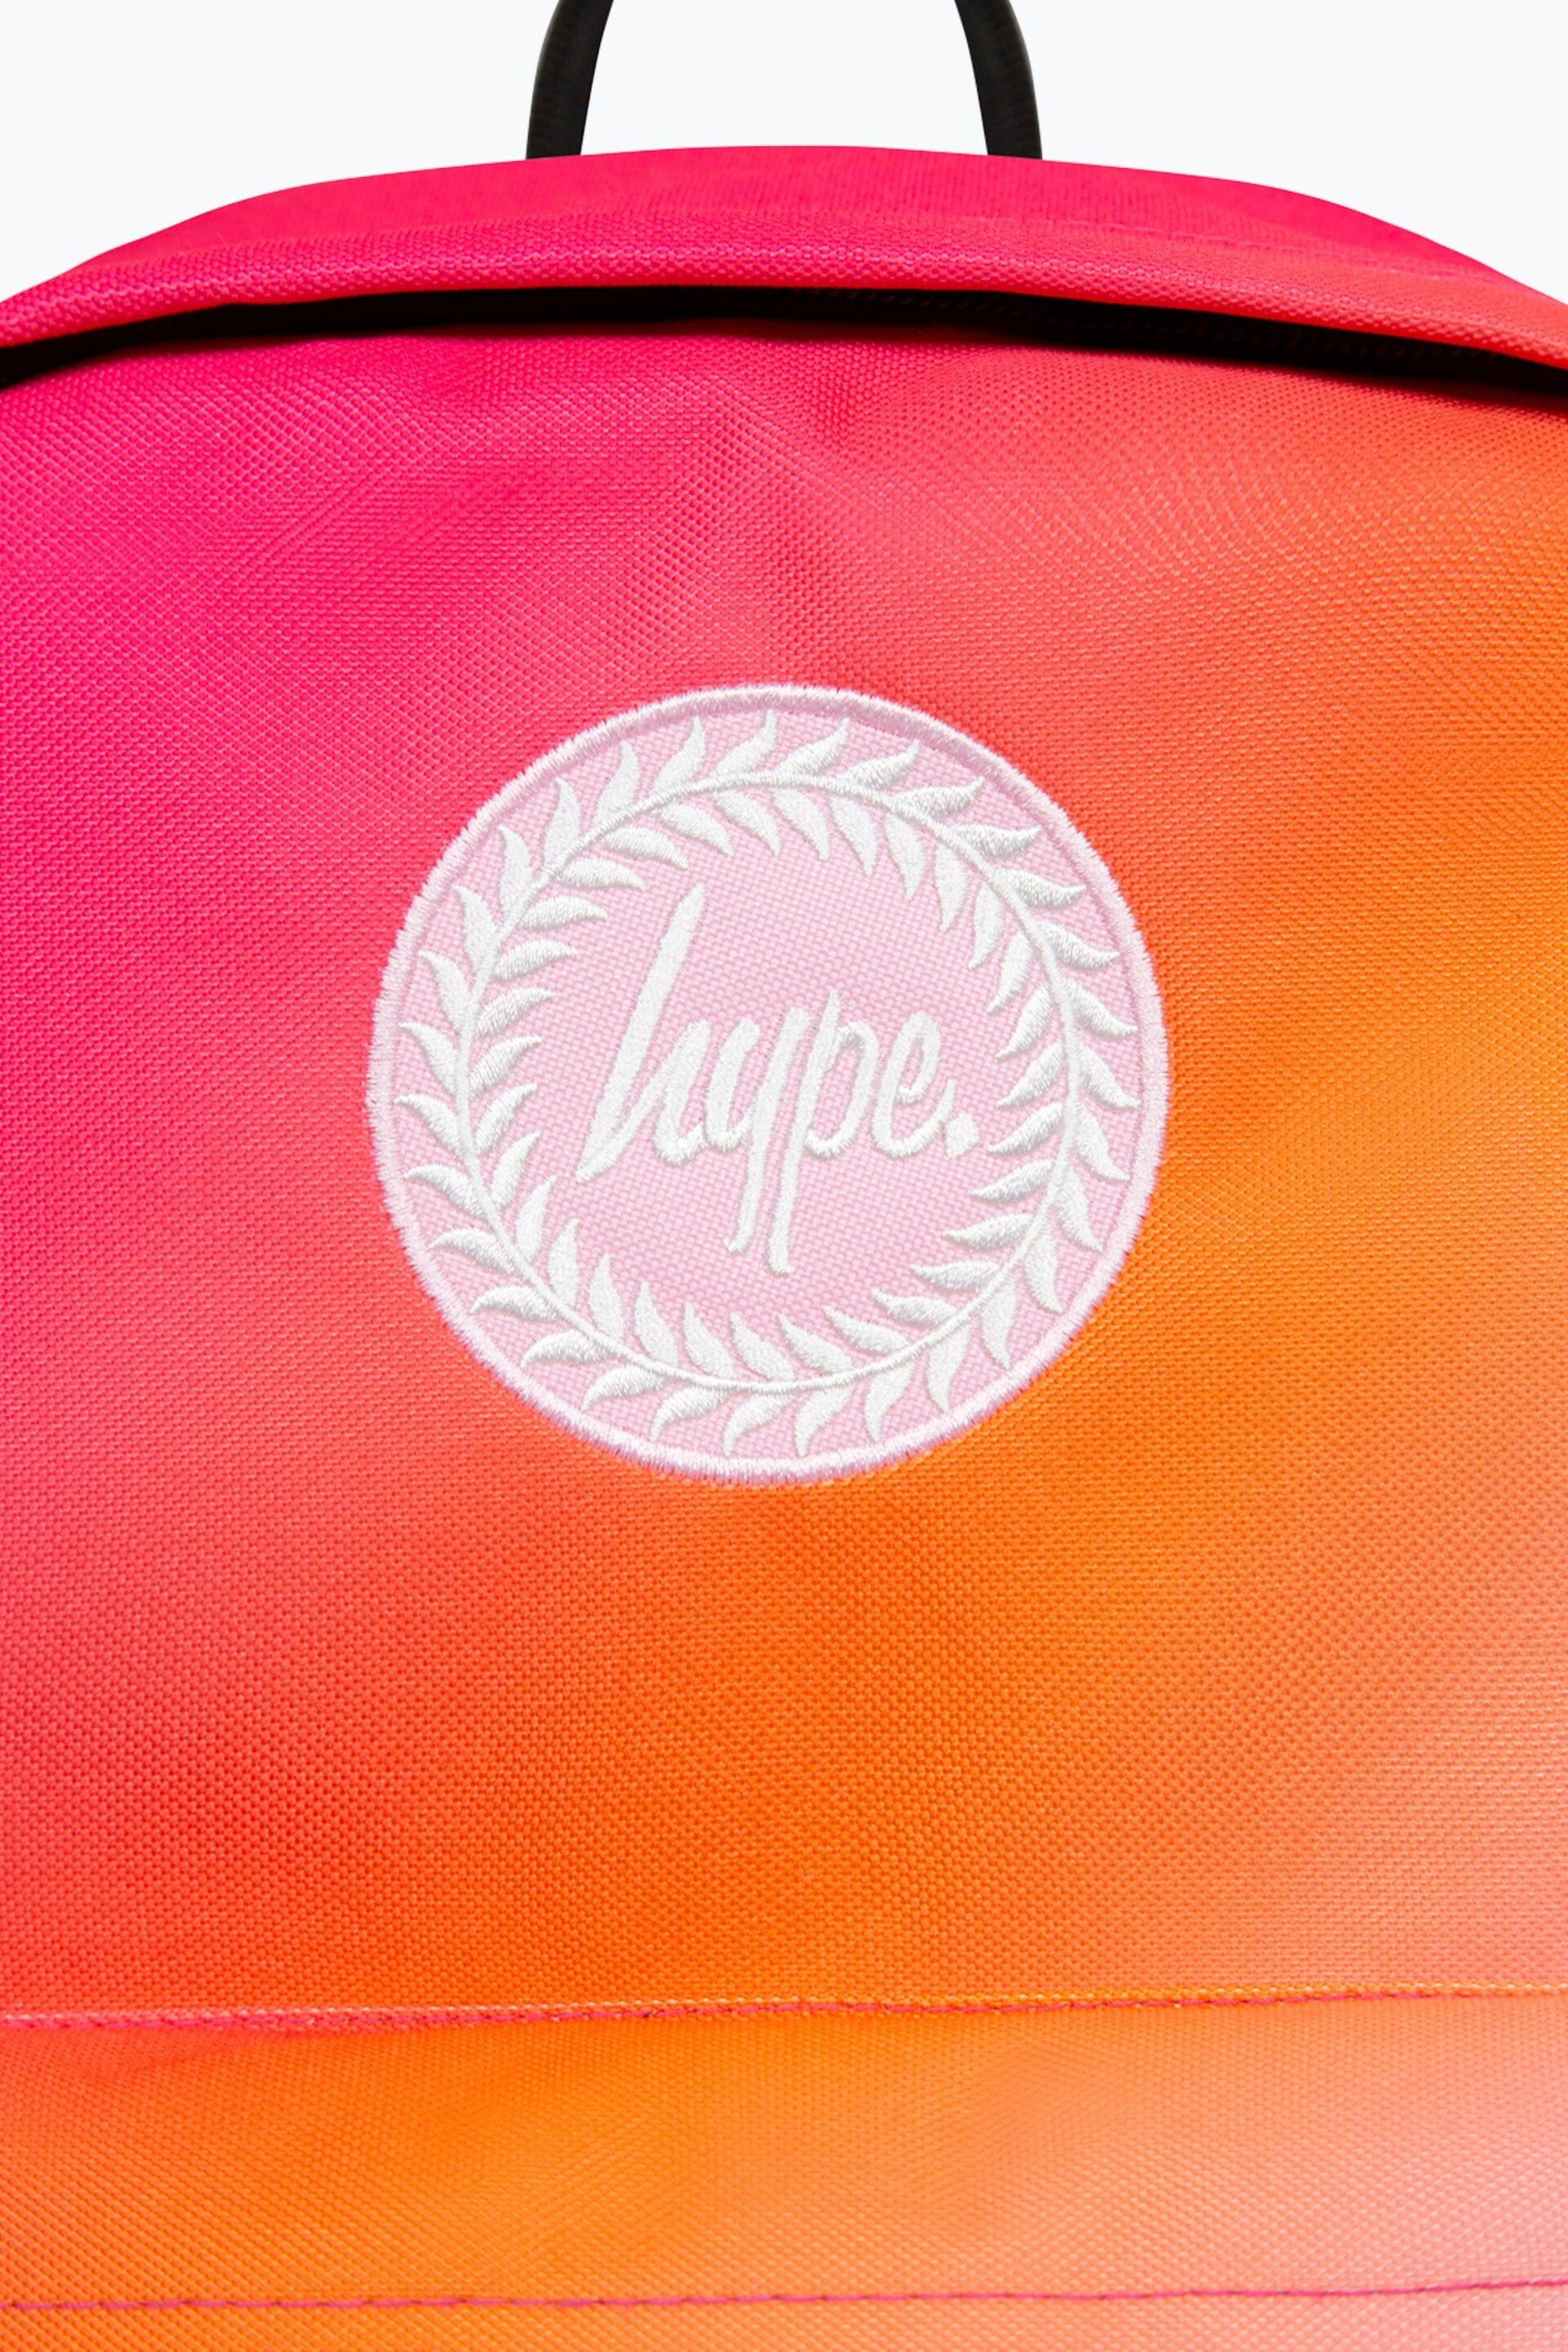 Hype. Unisex Pink Multi Gradient Badge Backpack - Image 6 of 13